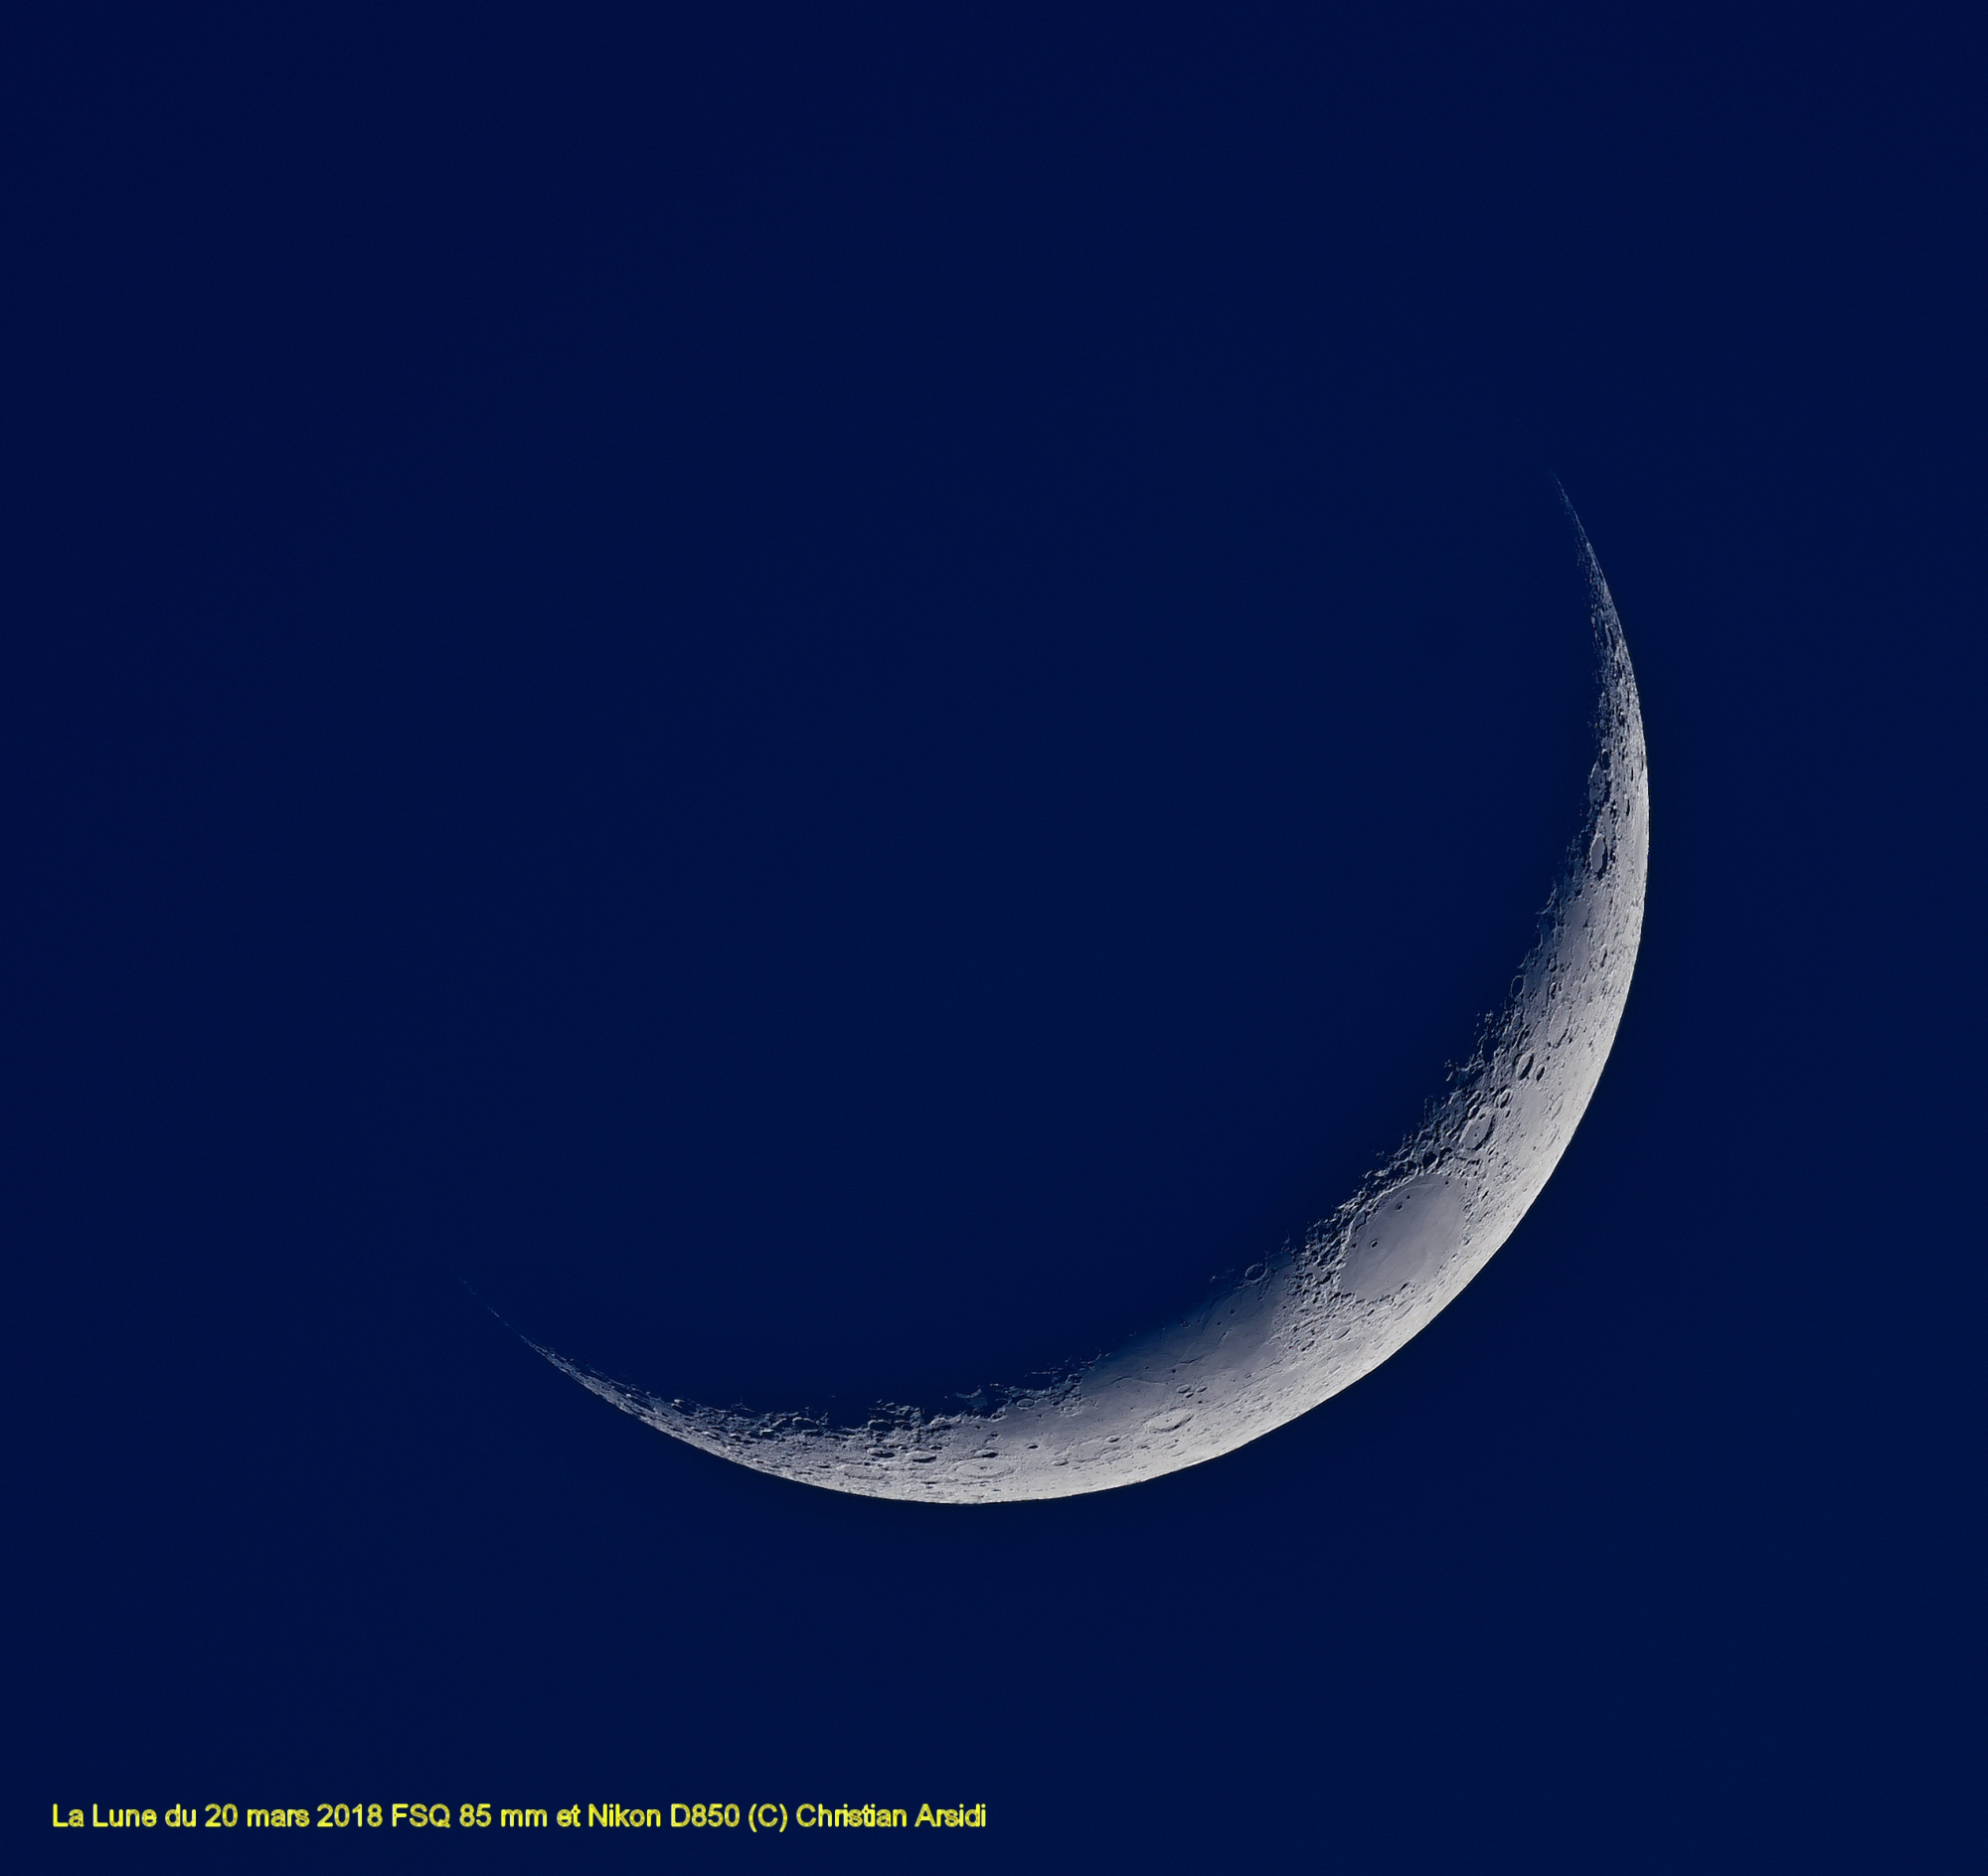 La Lune RVB 18 images Vancitteet_DxO-2 90 % TTB.jpg